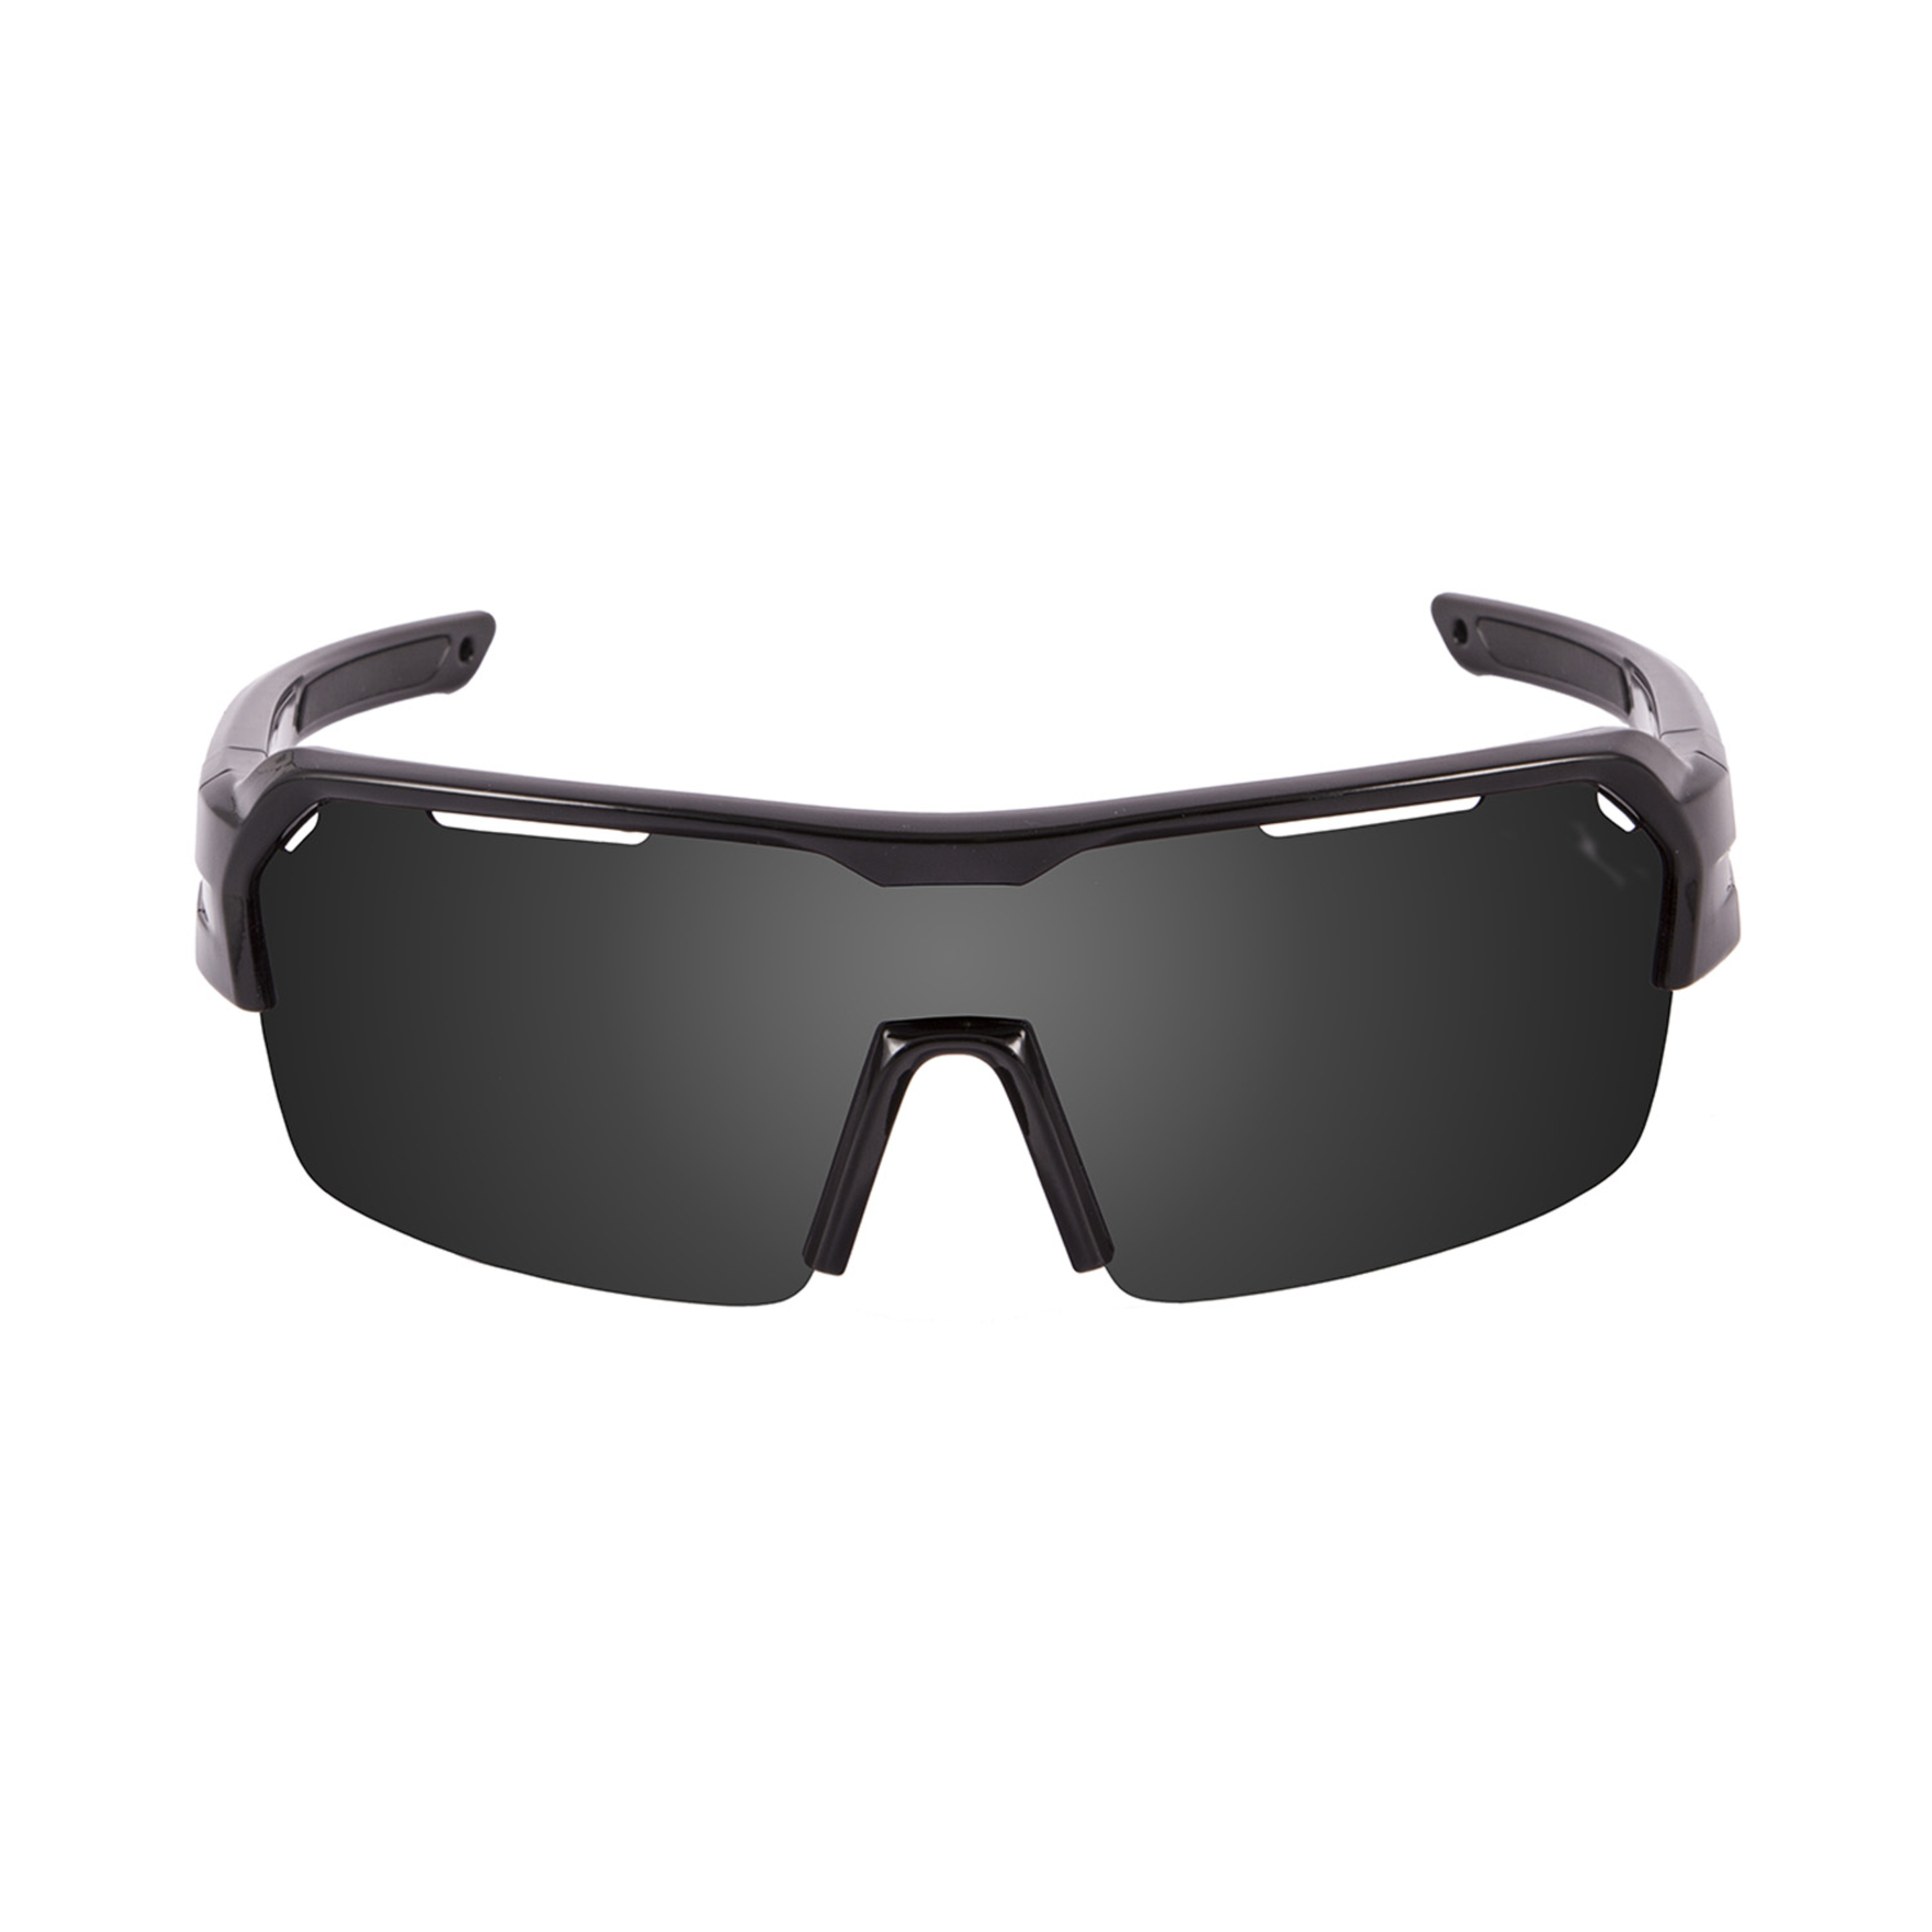 Gafas De Sol Técnicas Para La Práctica De Deportes De Agua Race Ocean Sunglasses - Negro/Gris  MKP